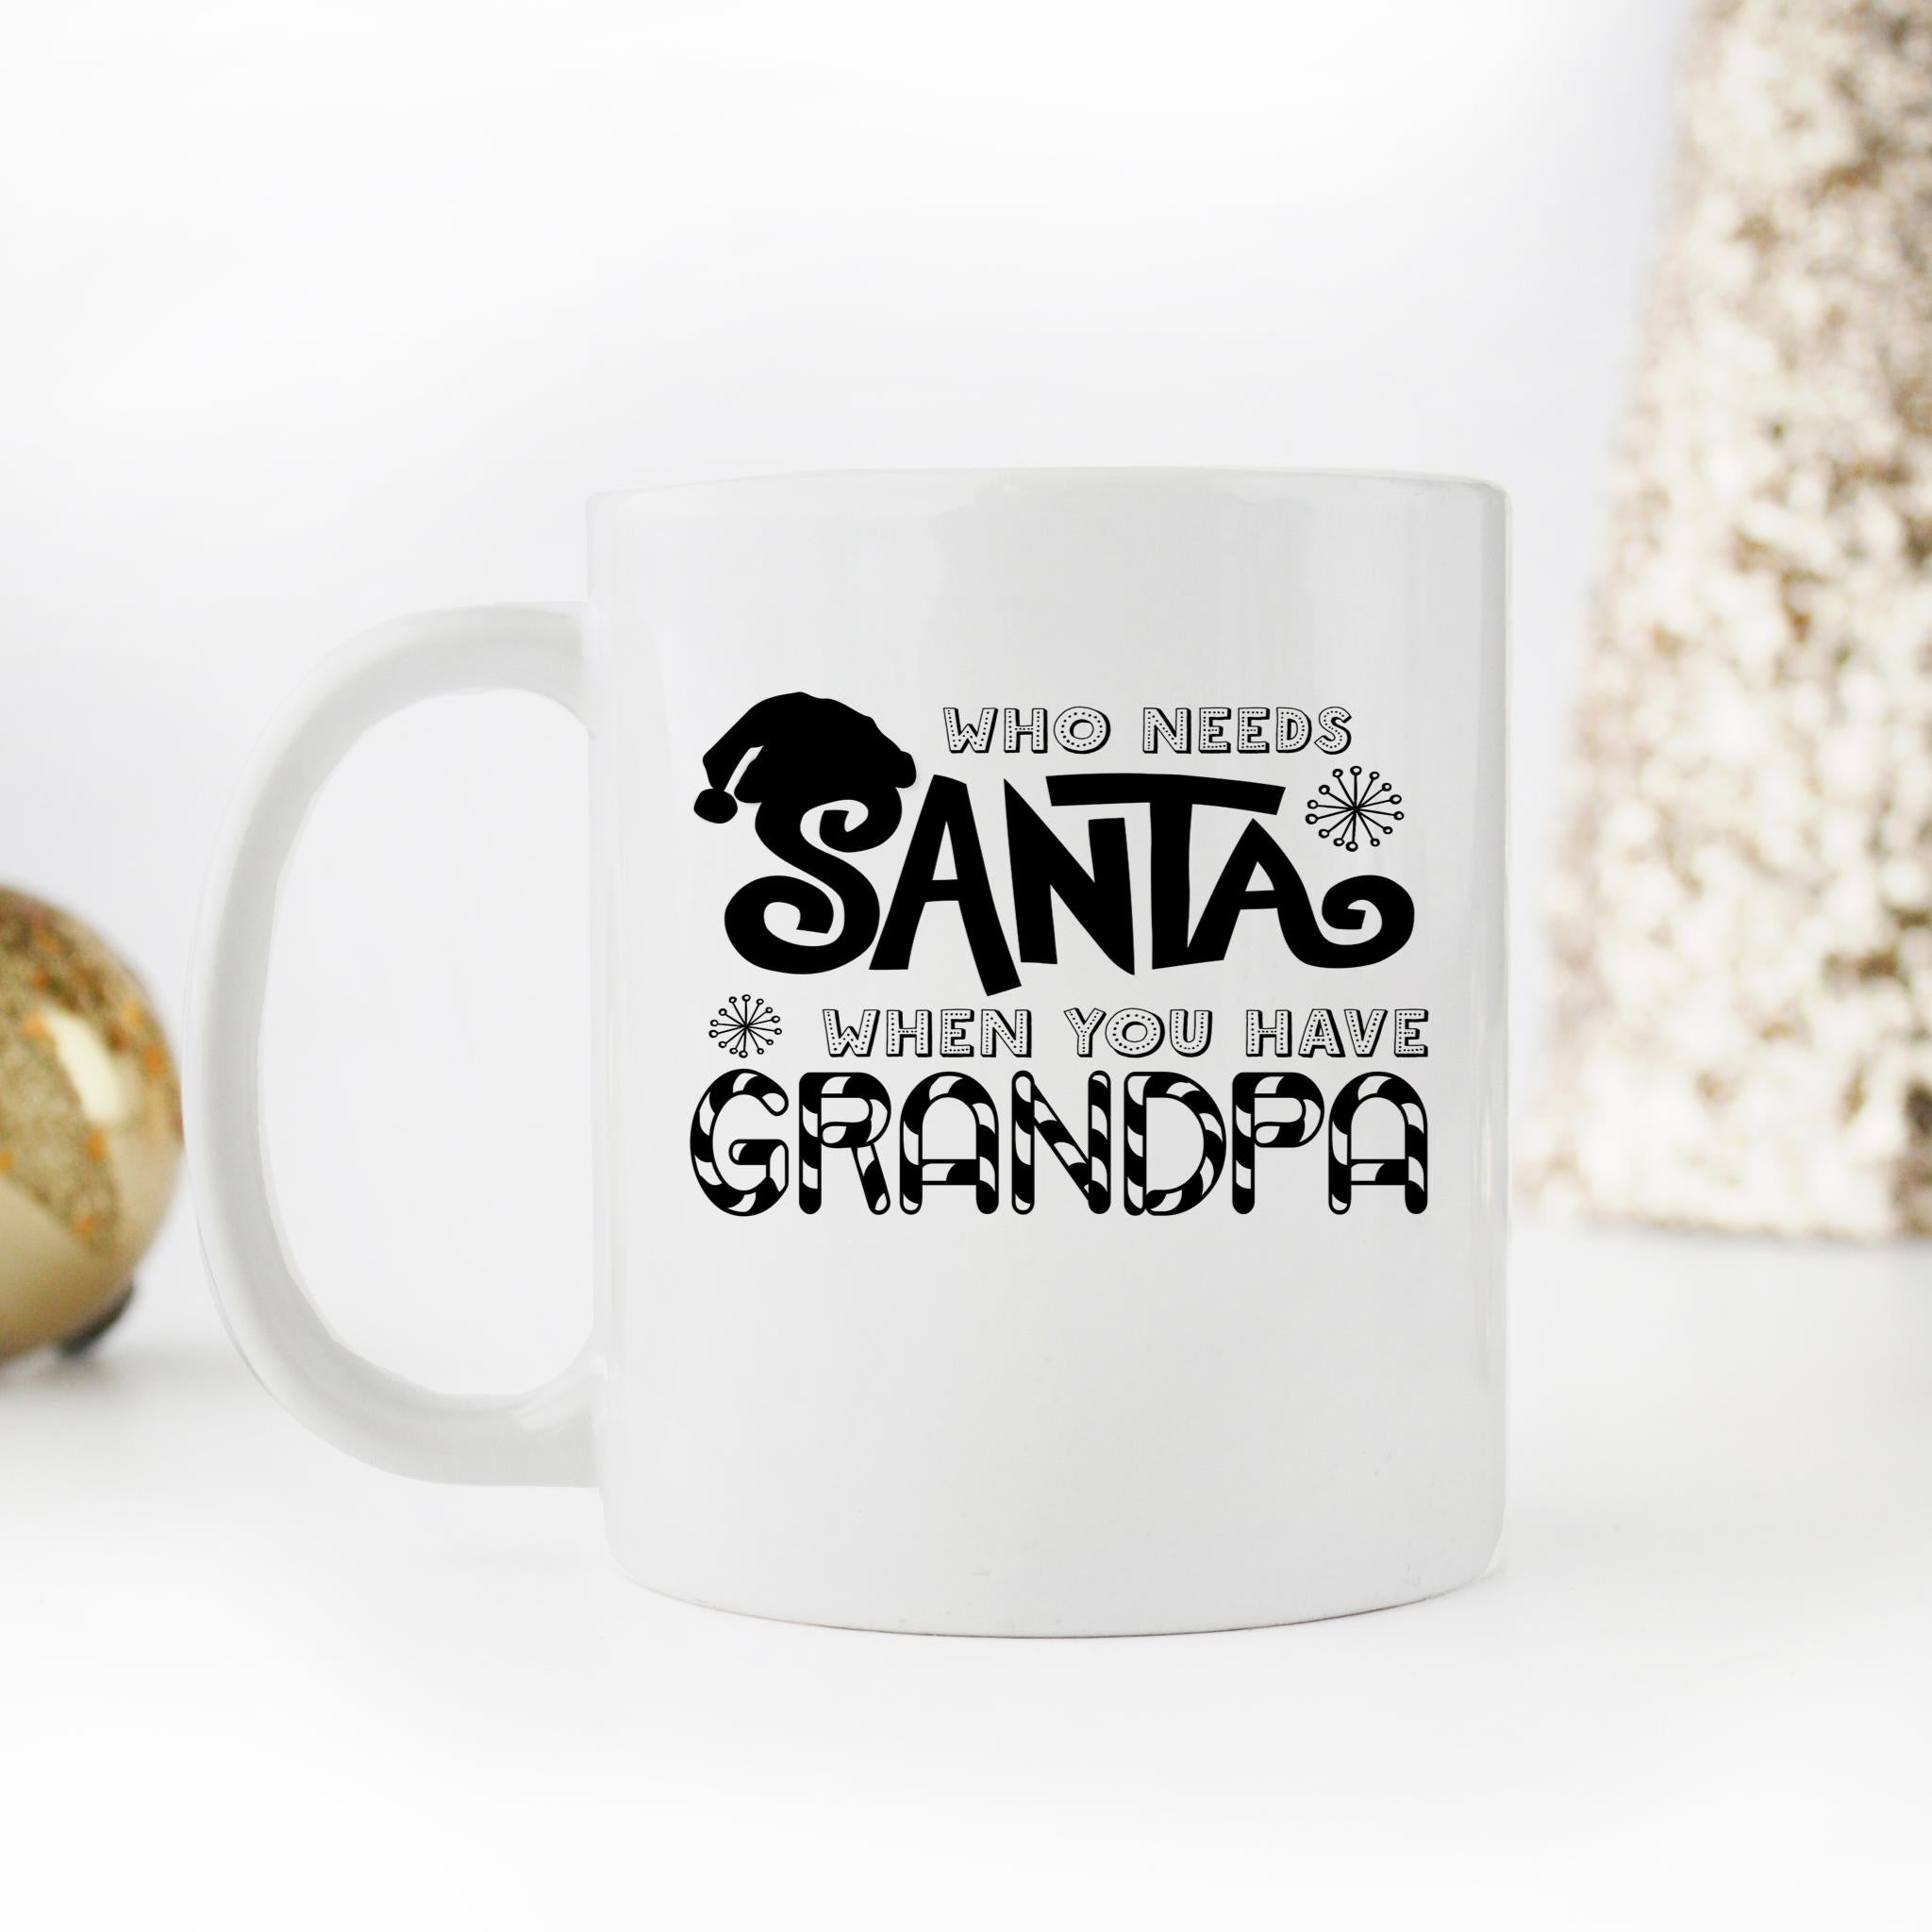 Skitongifts Funny Ceramic Novelty Coffee Mug Who Needs Santa When You Have Grandpa Funny Christmas z80eI1D